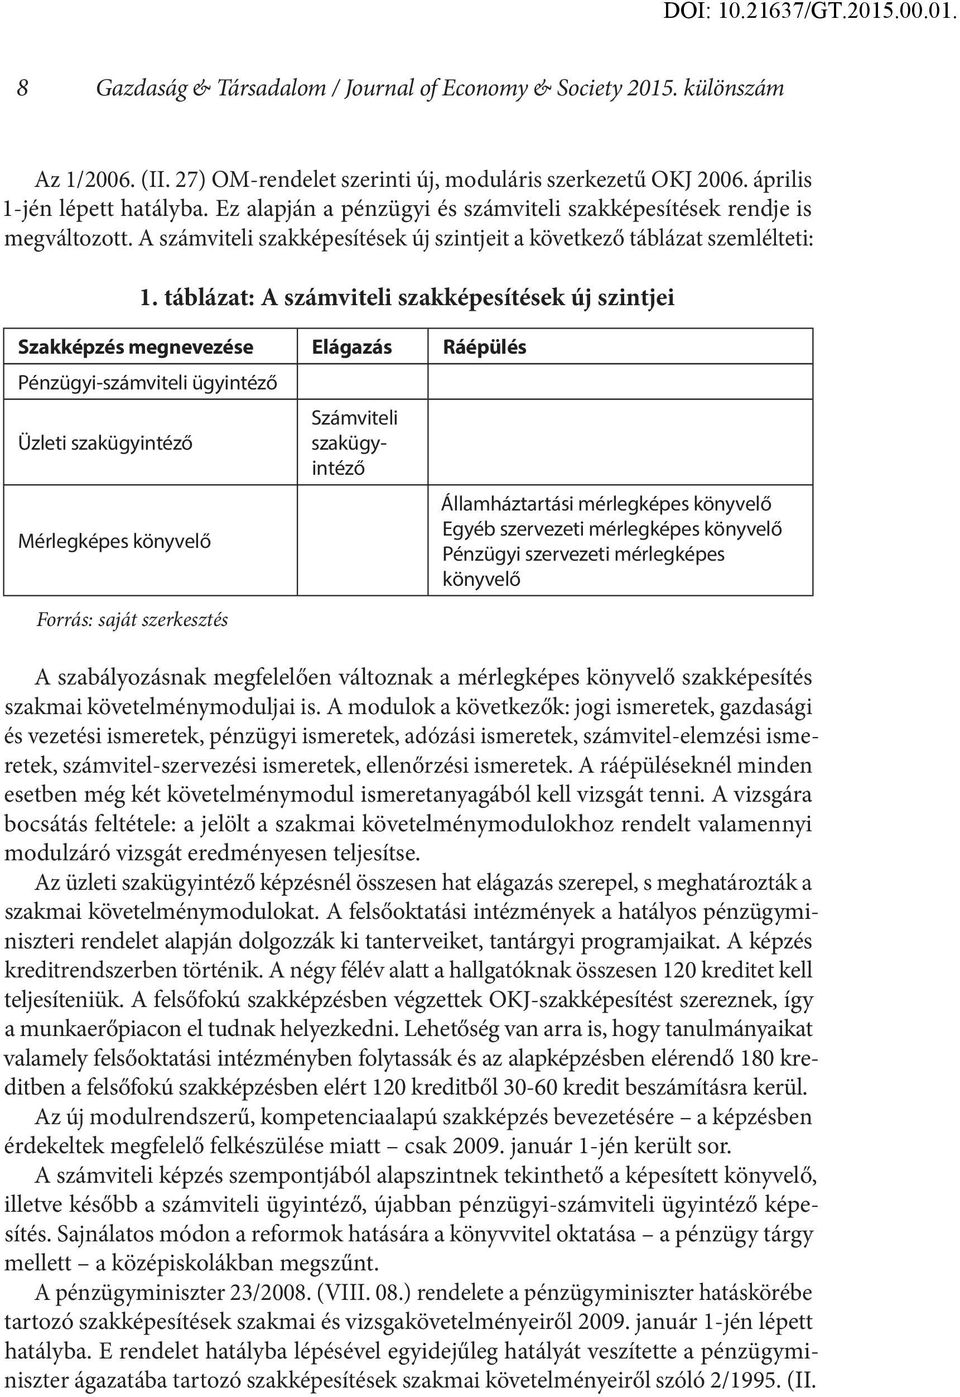 Gazdaság & Társadalom - PDF Free Download